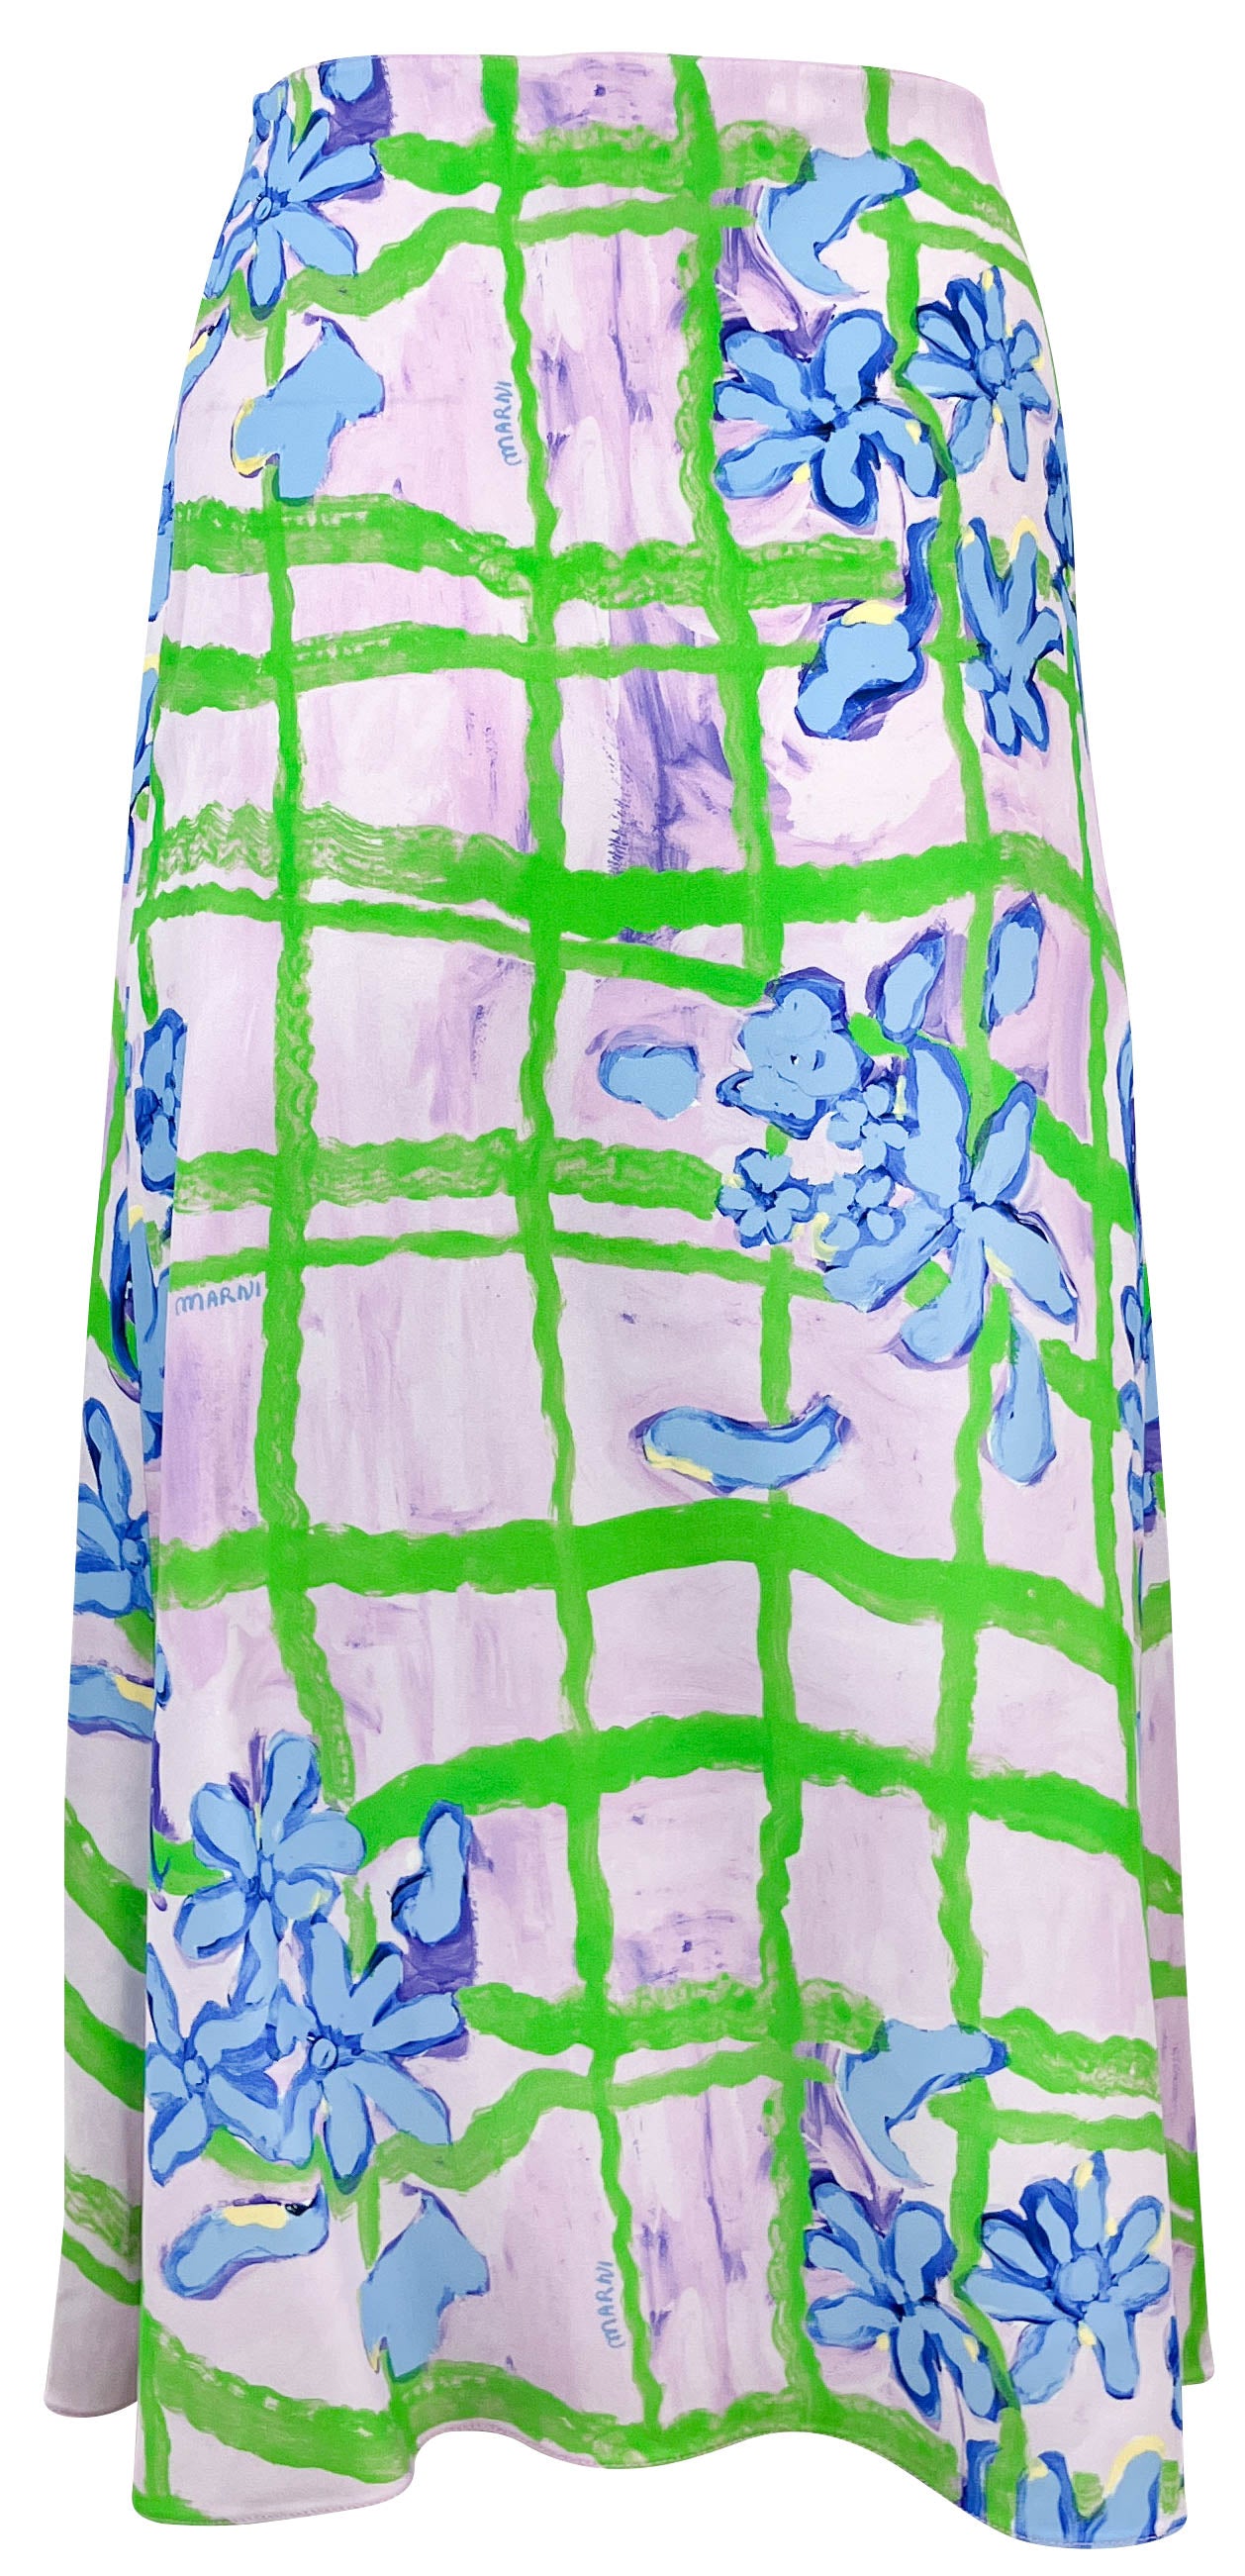 Marni Floral Printed Skirt in Mauve - Discounts on Marni at UAL